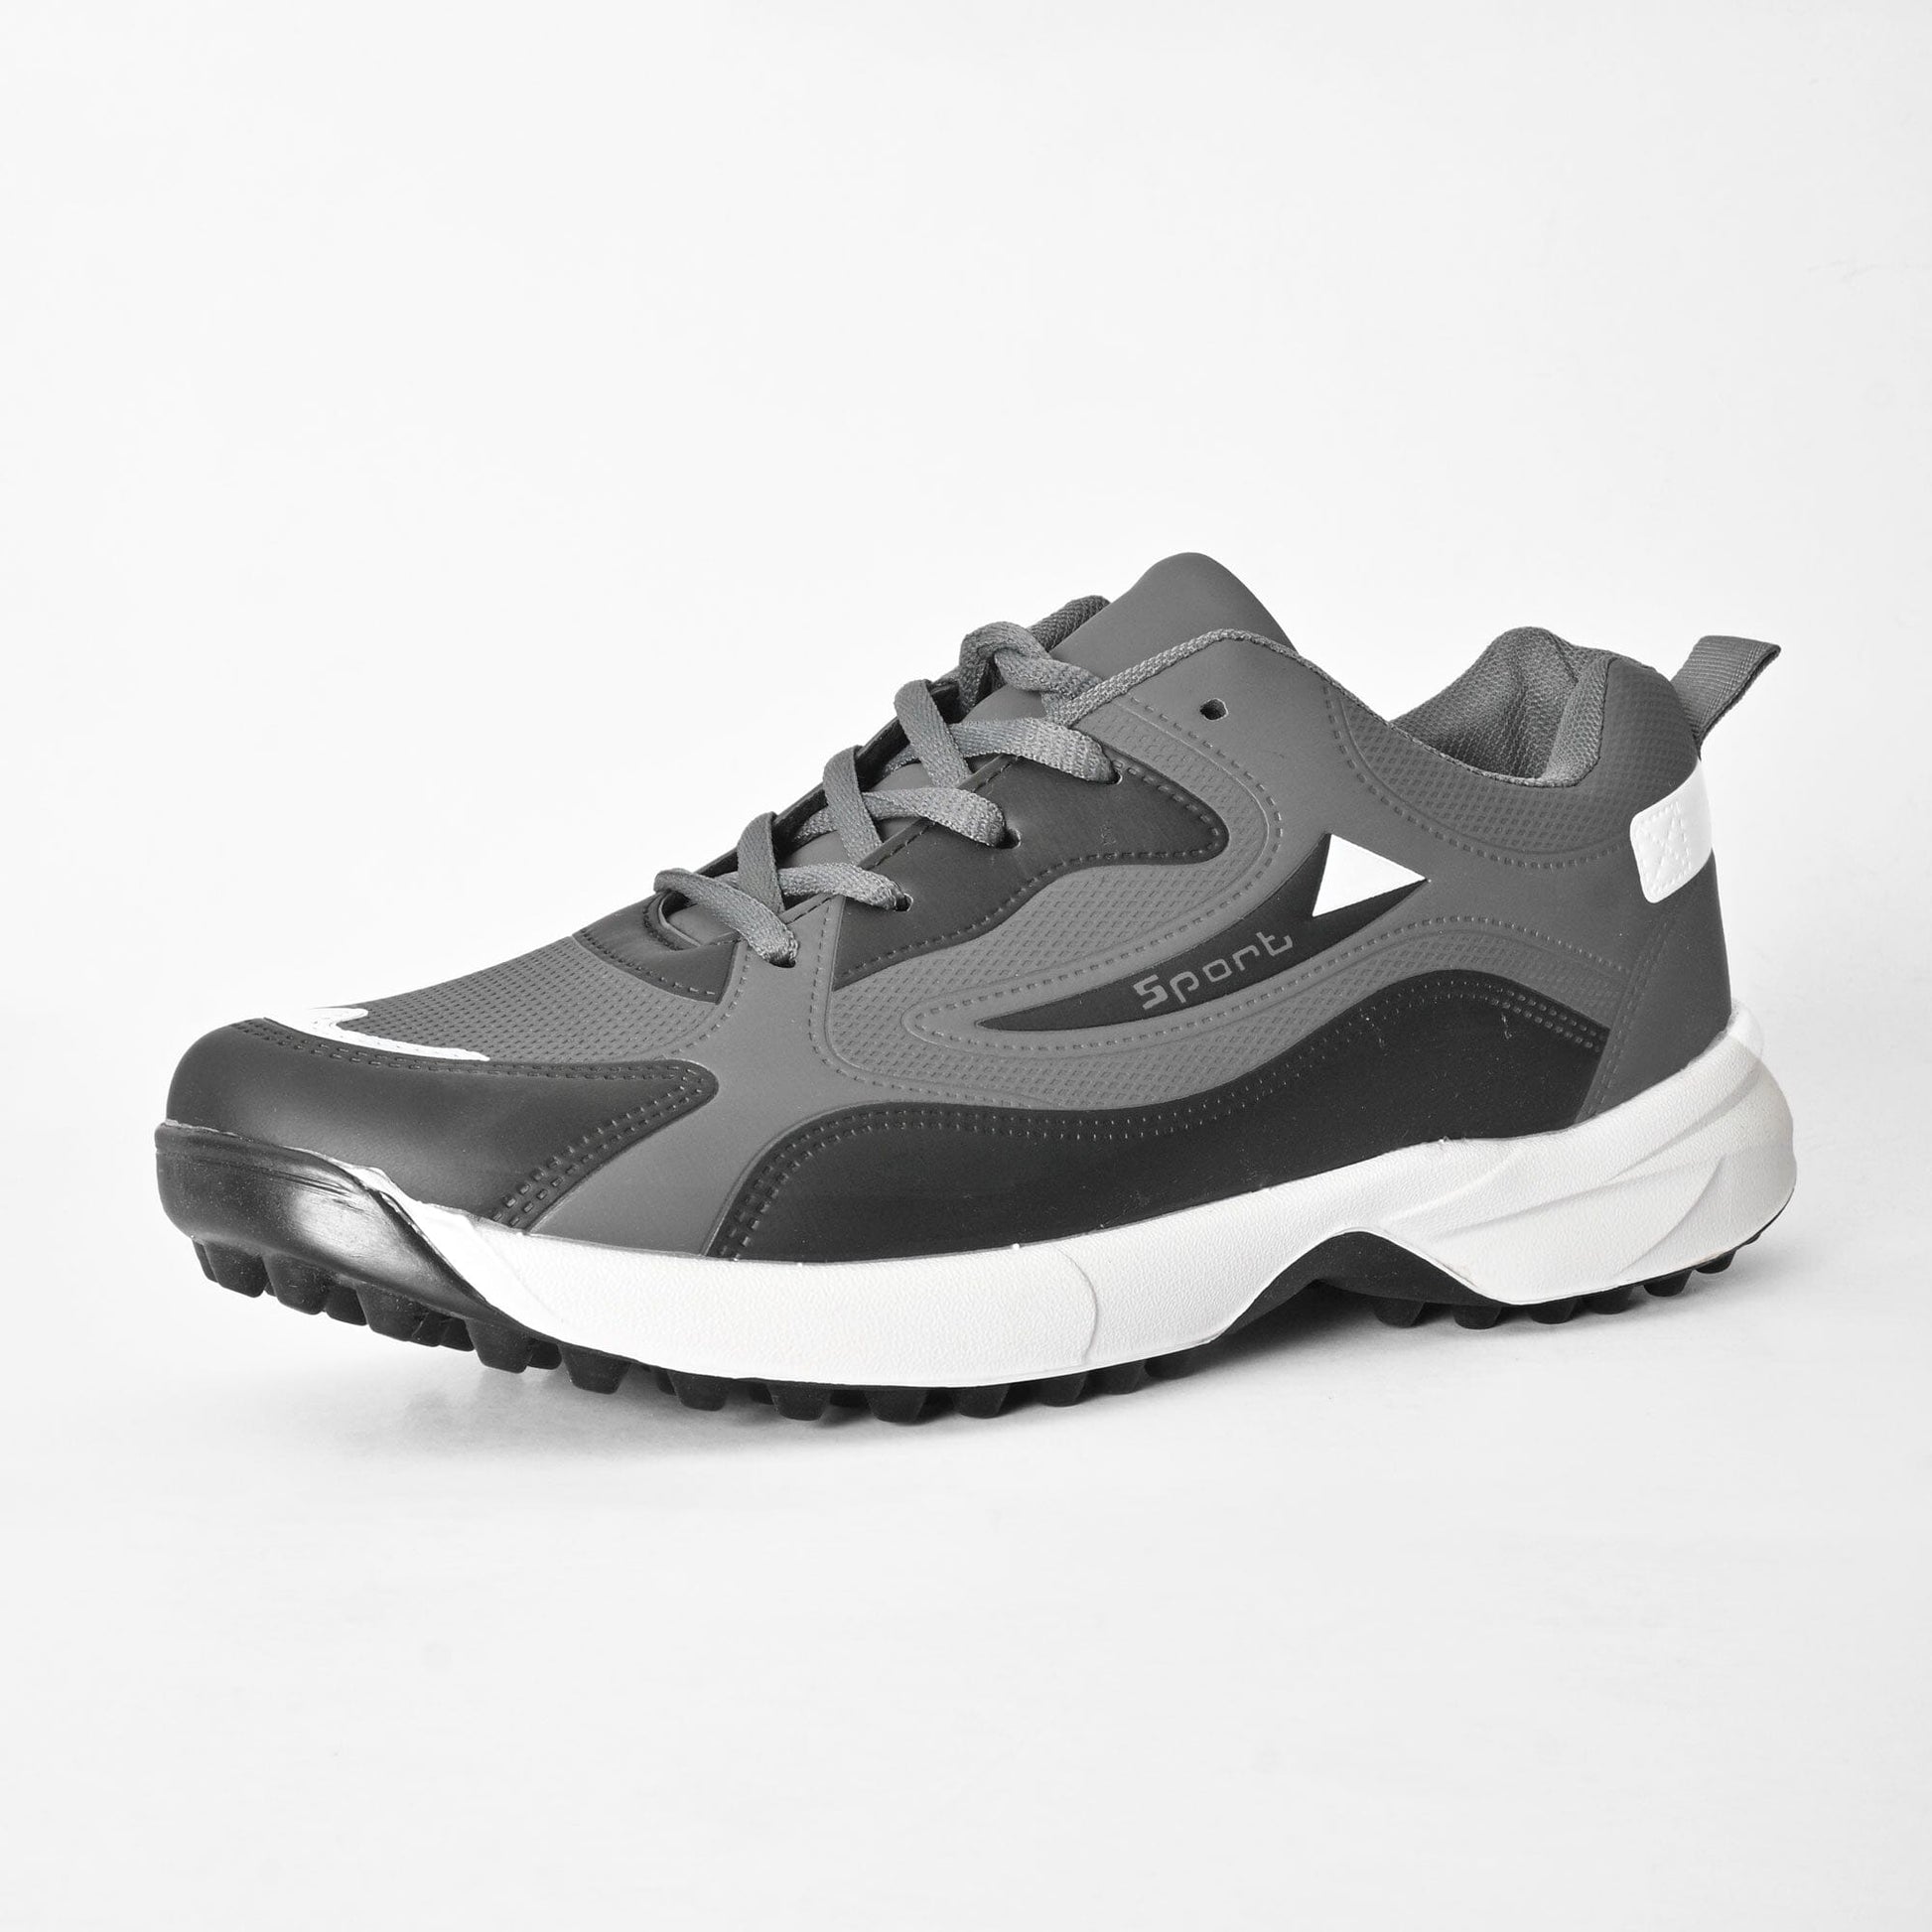 Walk Men's Classic Sneakers Men's Shoes Hamza Traders Grey EUR 39 